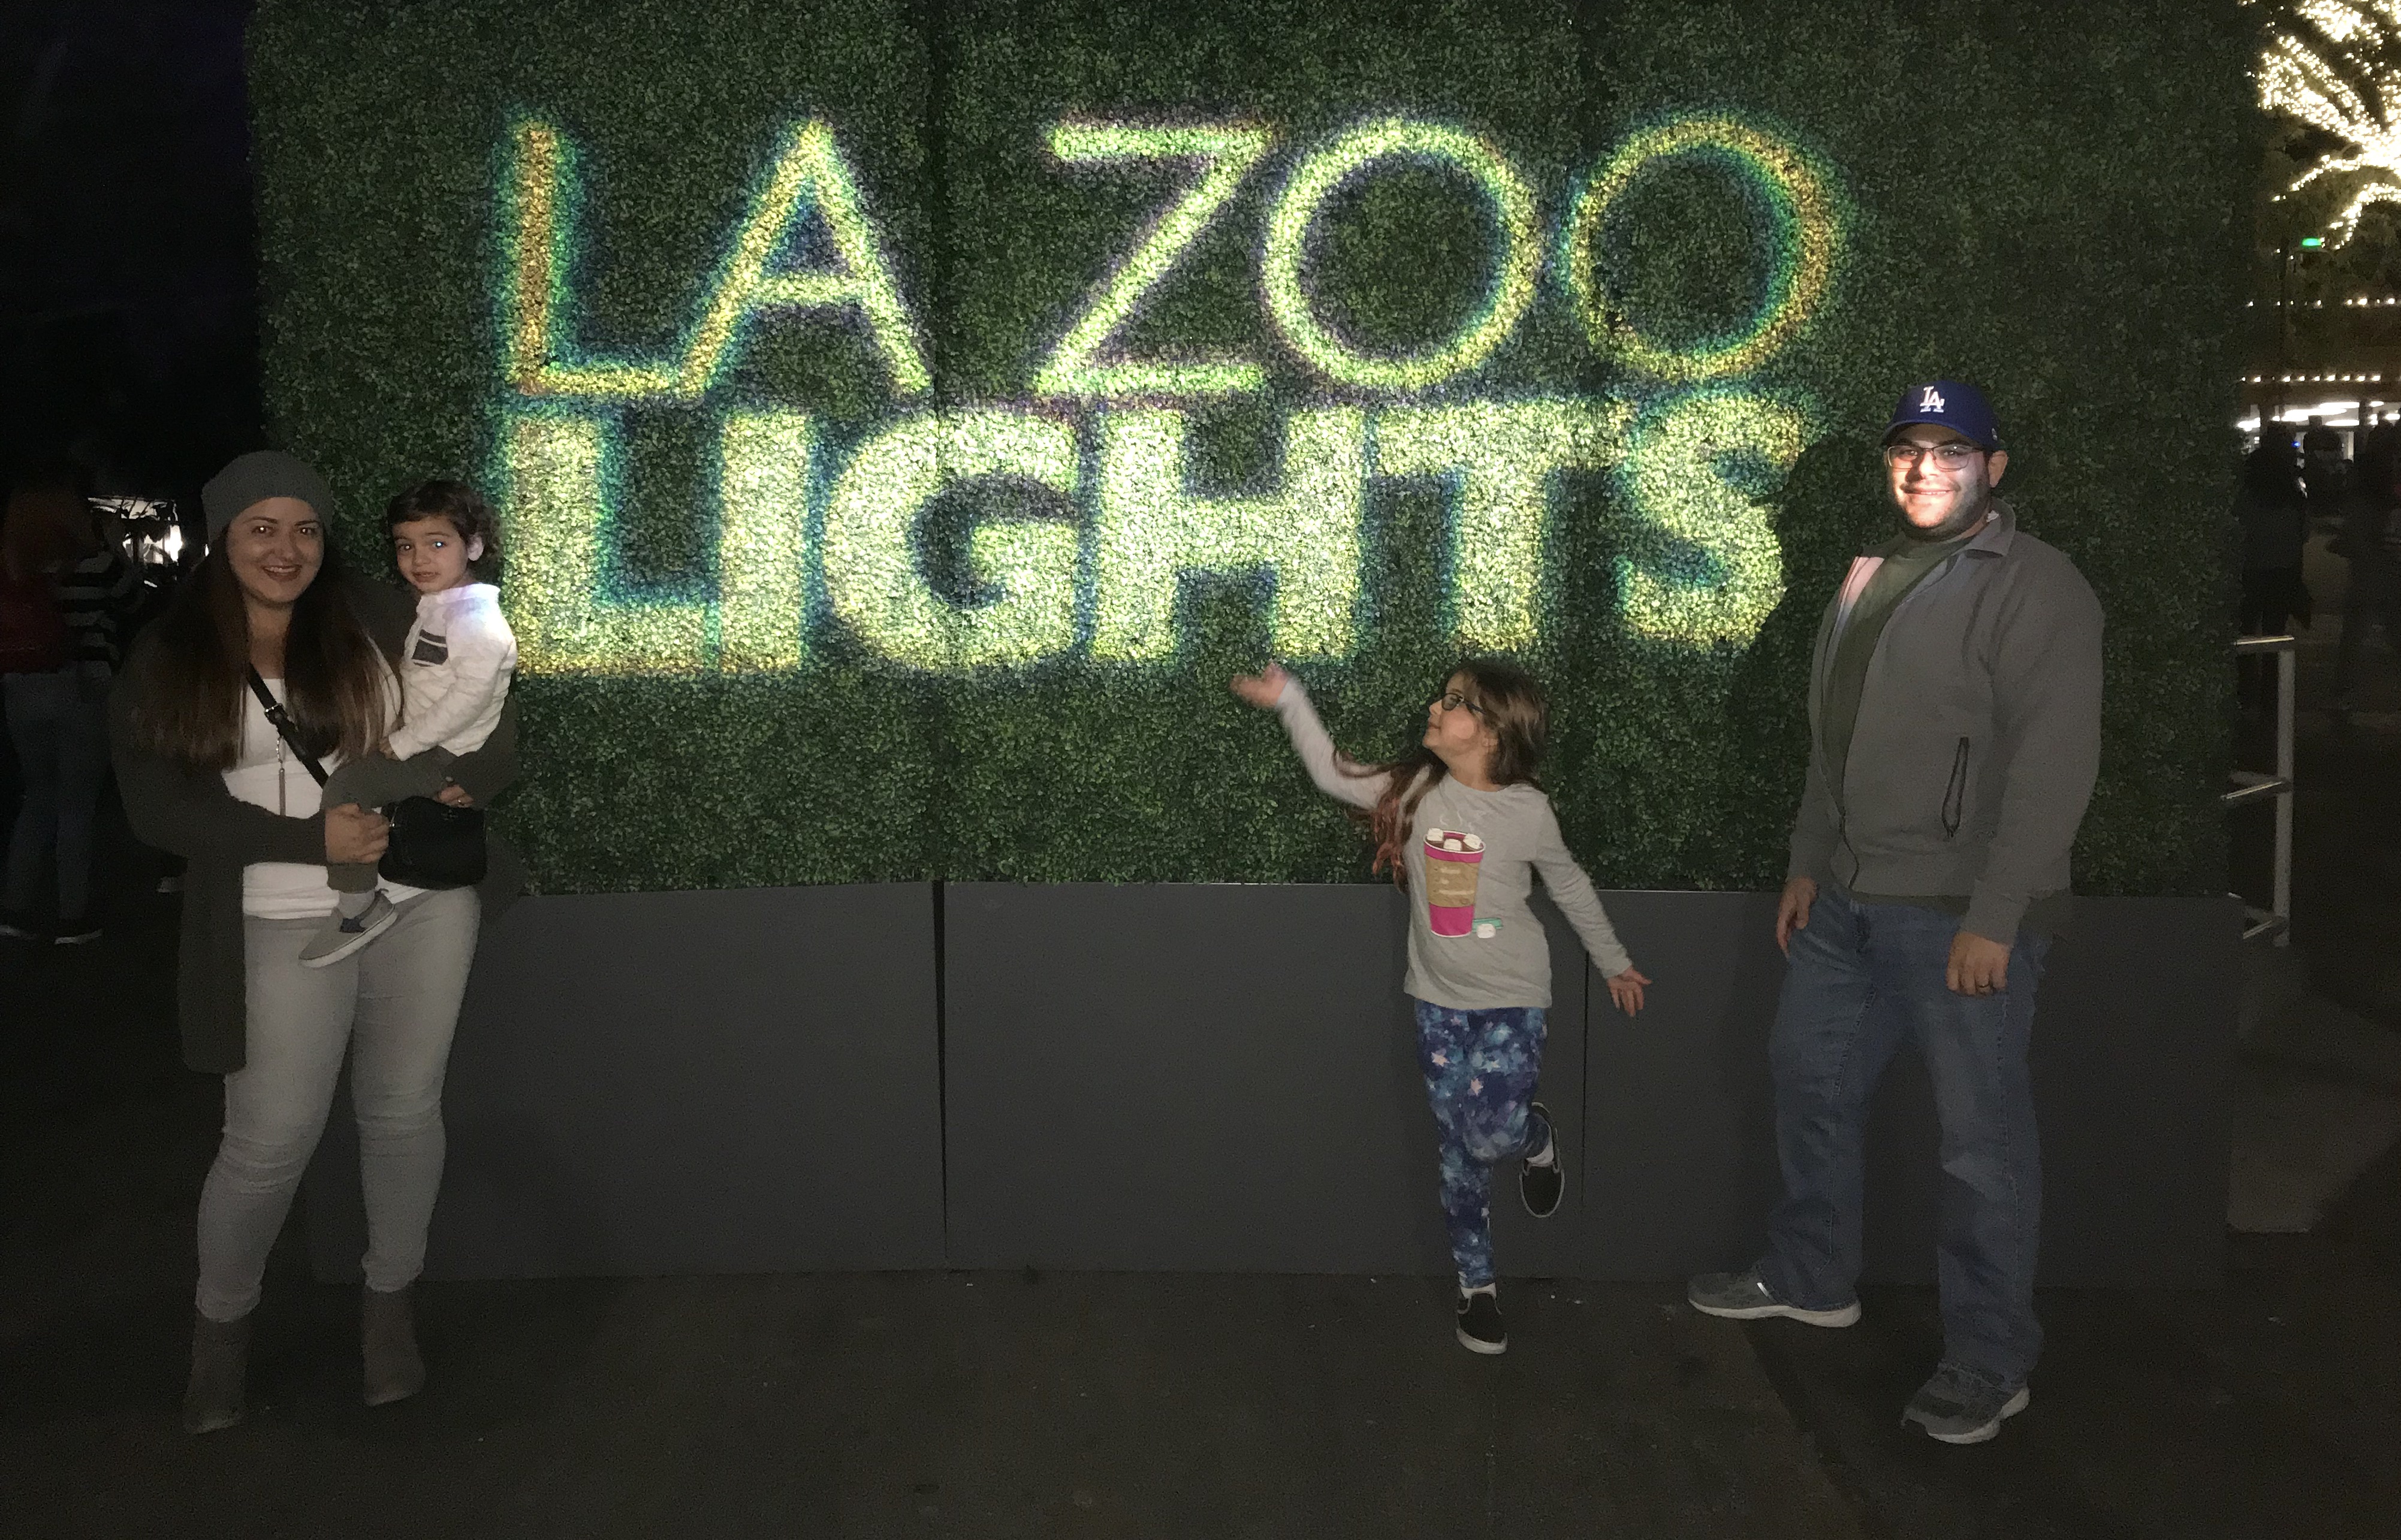 LA Zoo Lights